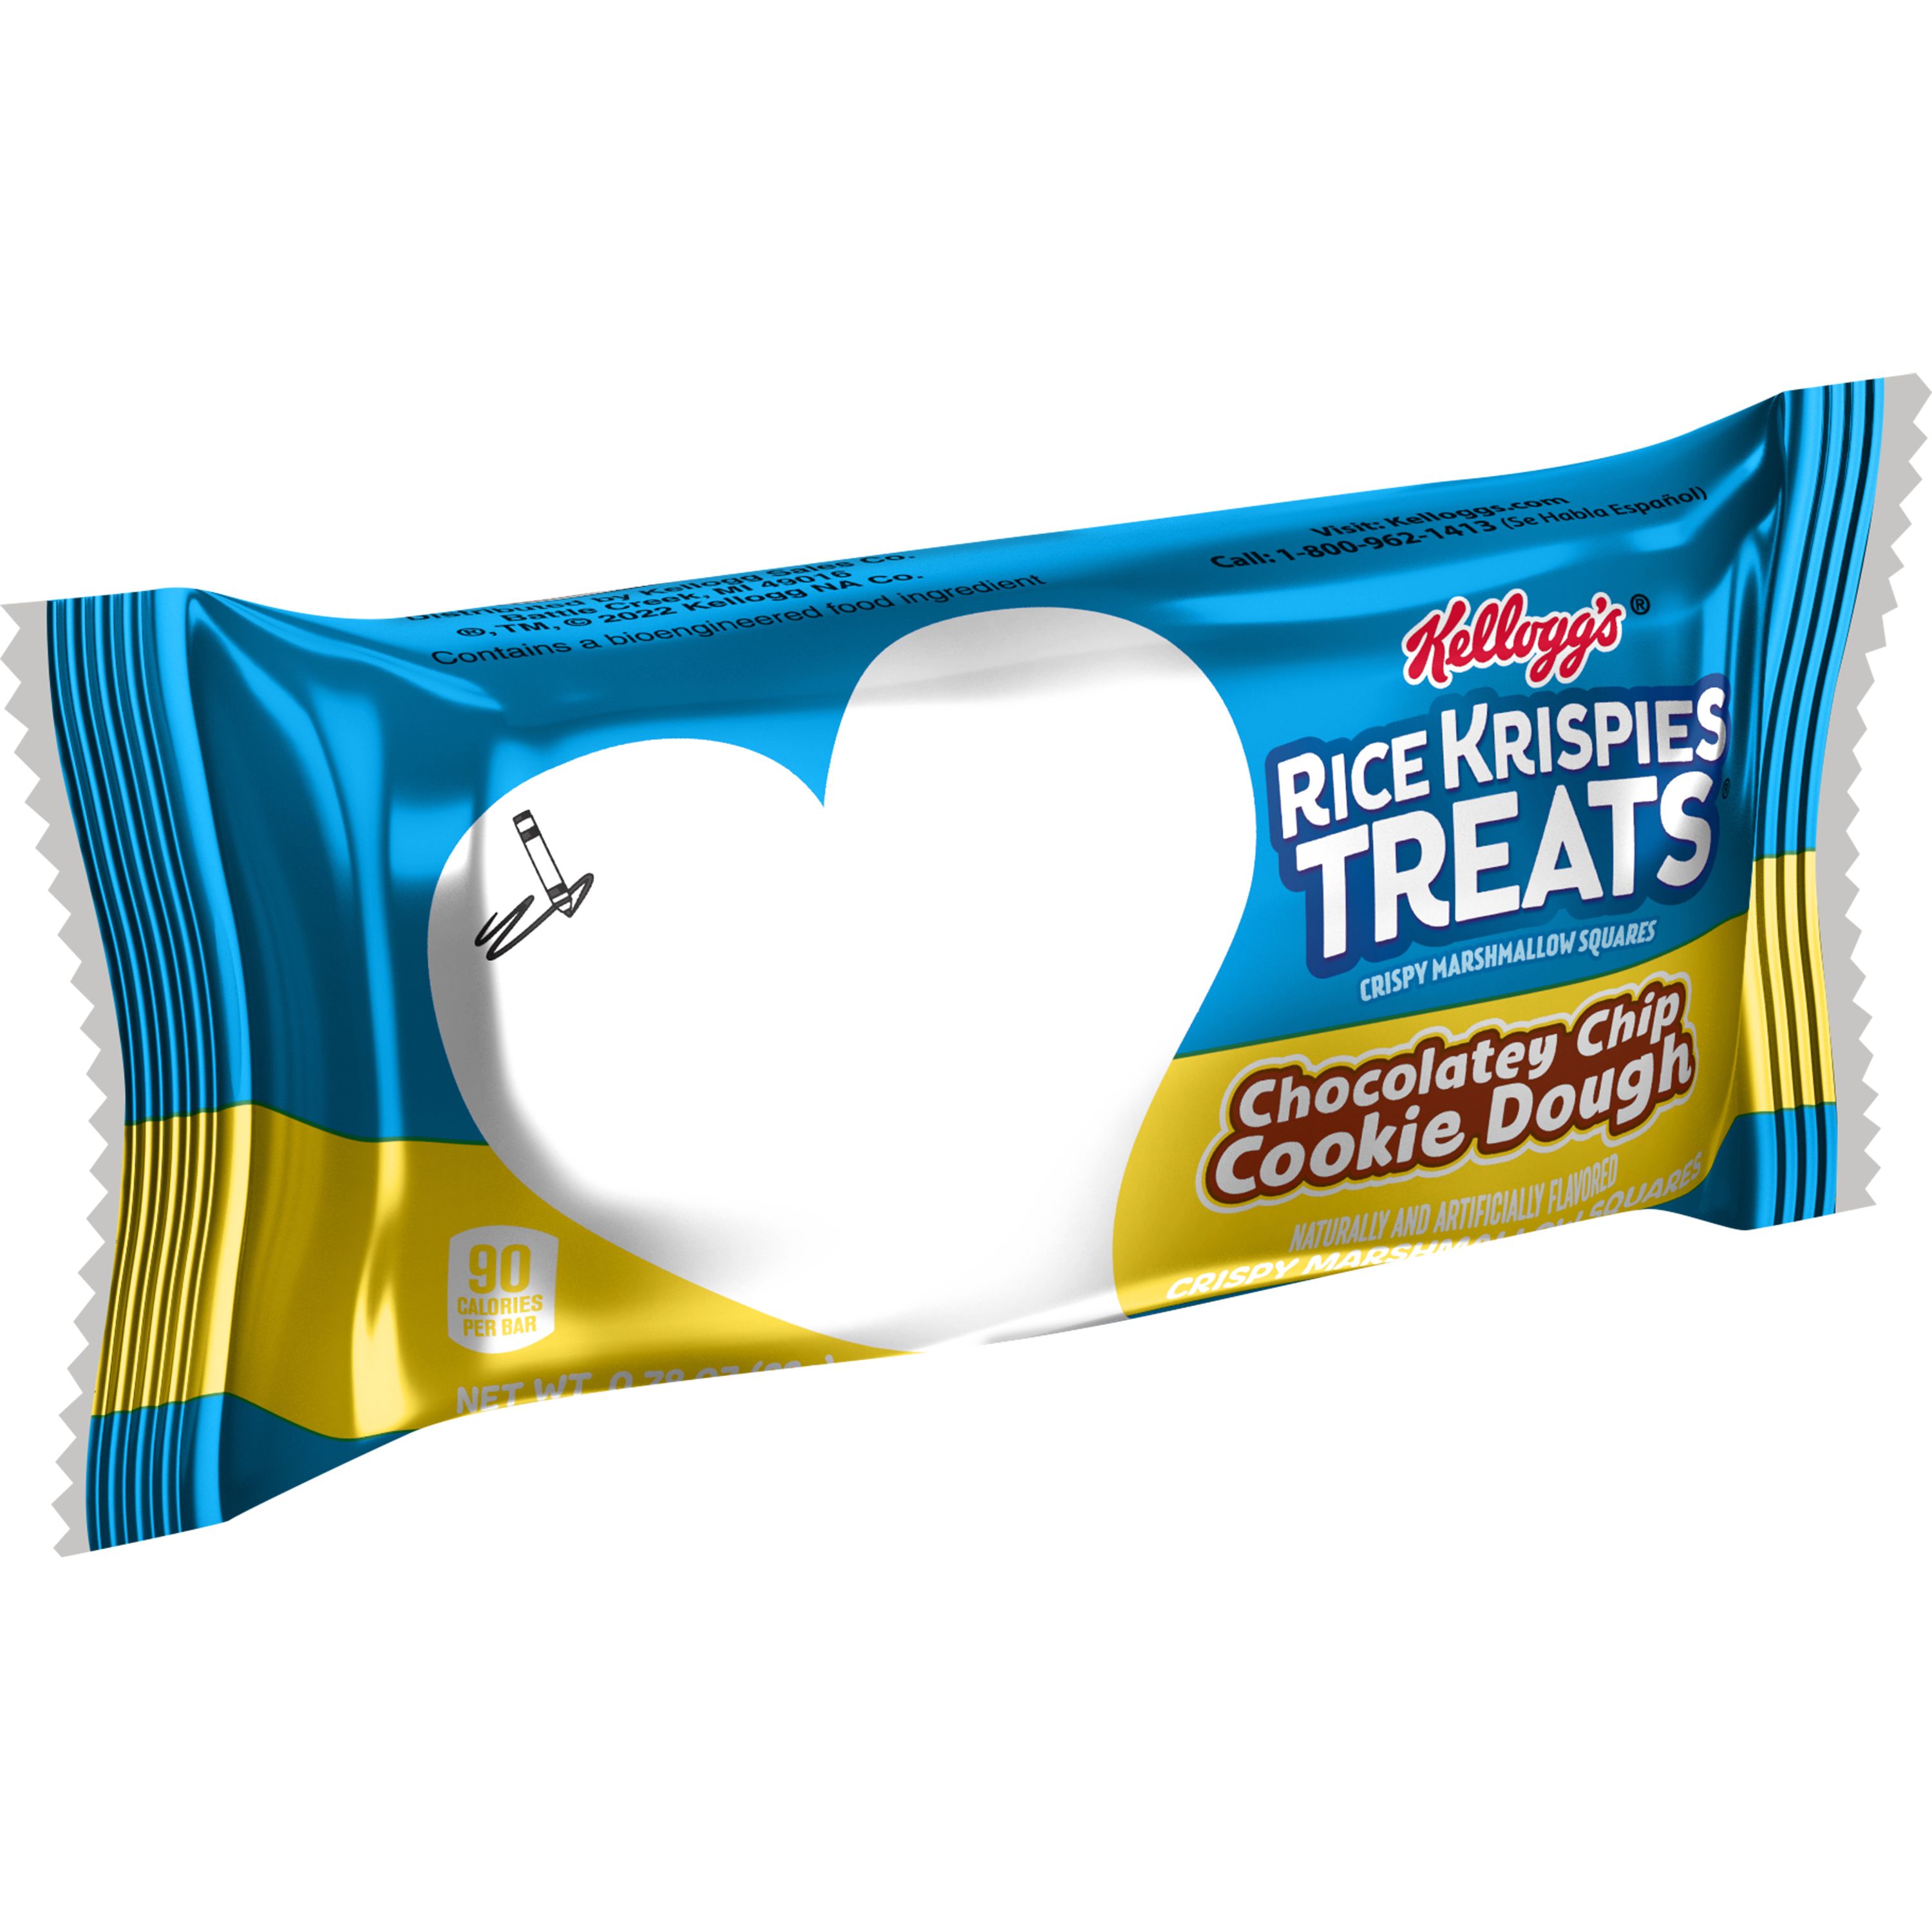 Kellogg’s ® Rice Krispies Treats ® Chocolatey Chip Cookie Dough Bars ...